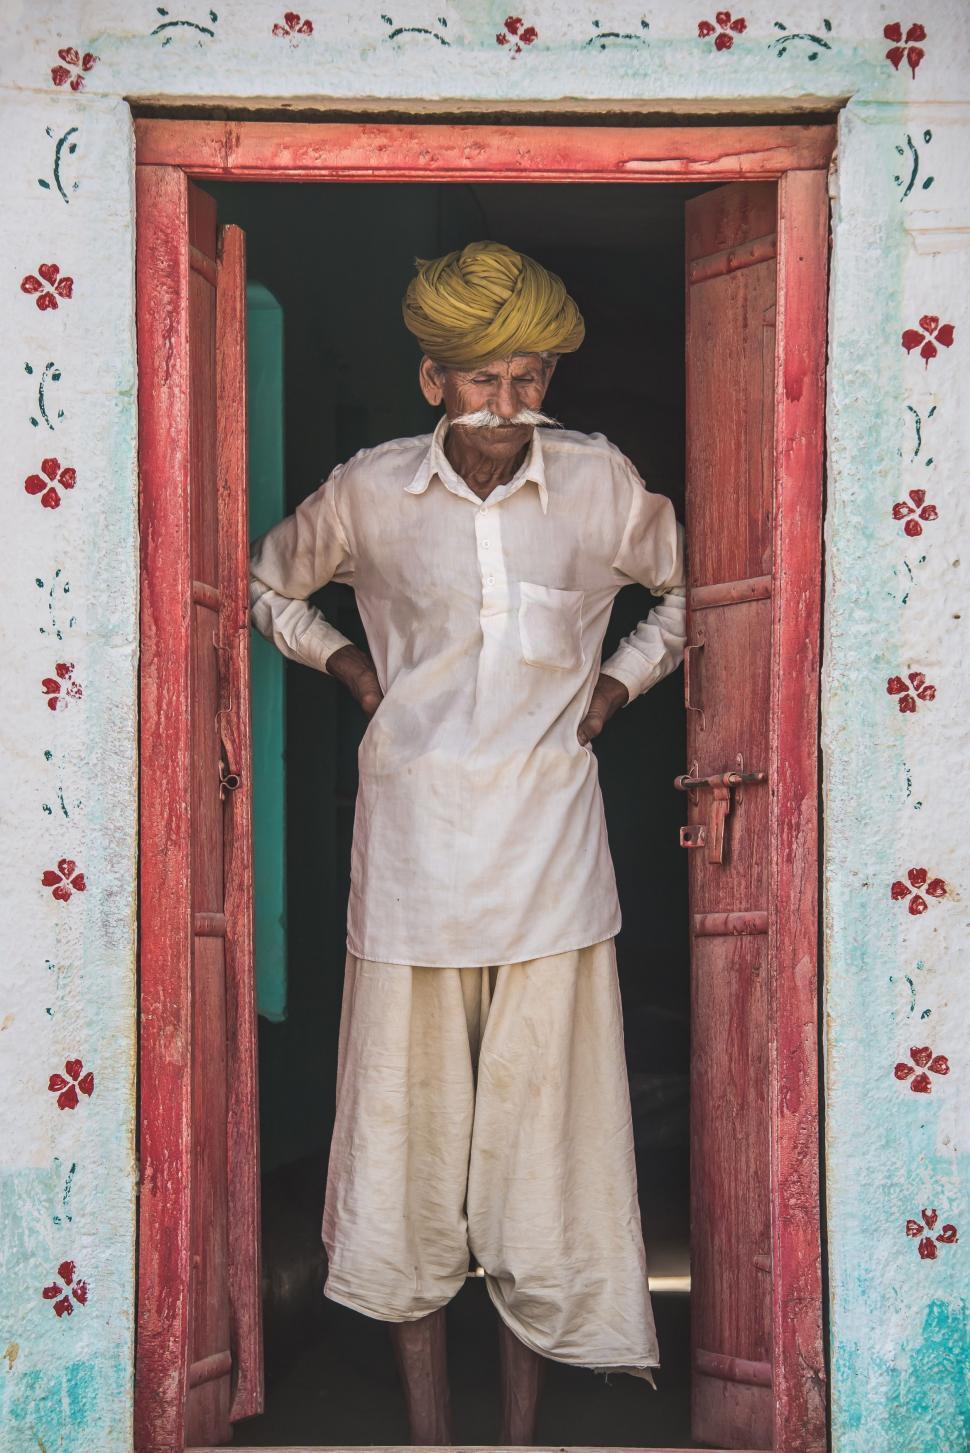 Free Image of Man Standing in Doorway With Hands on Hips 